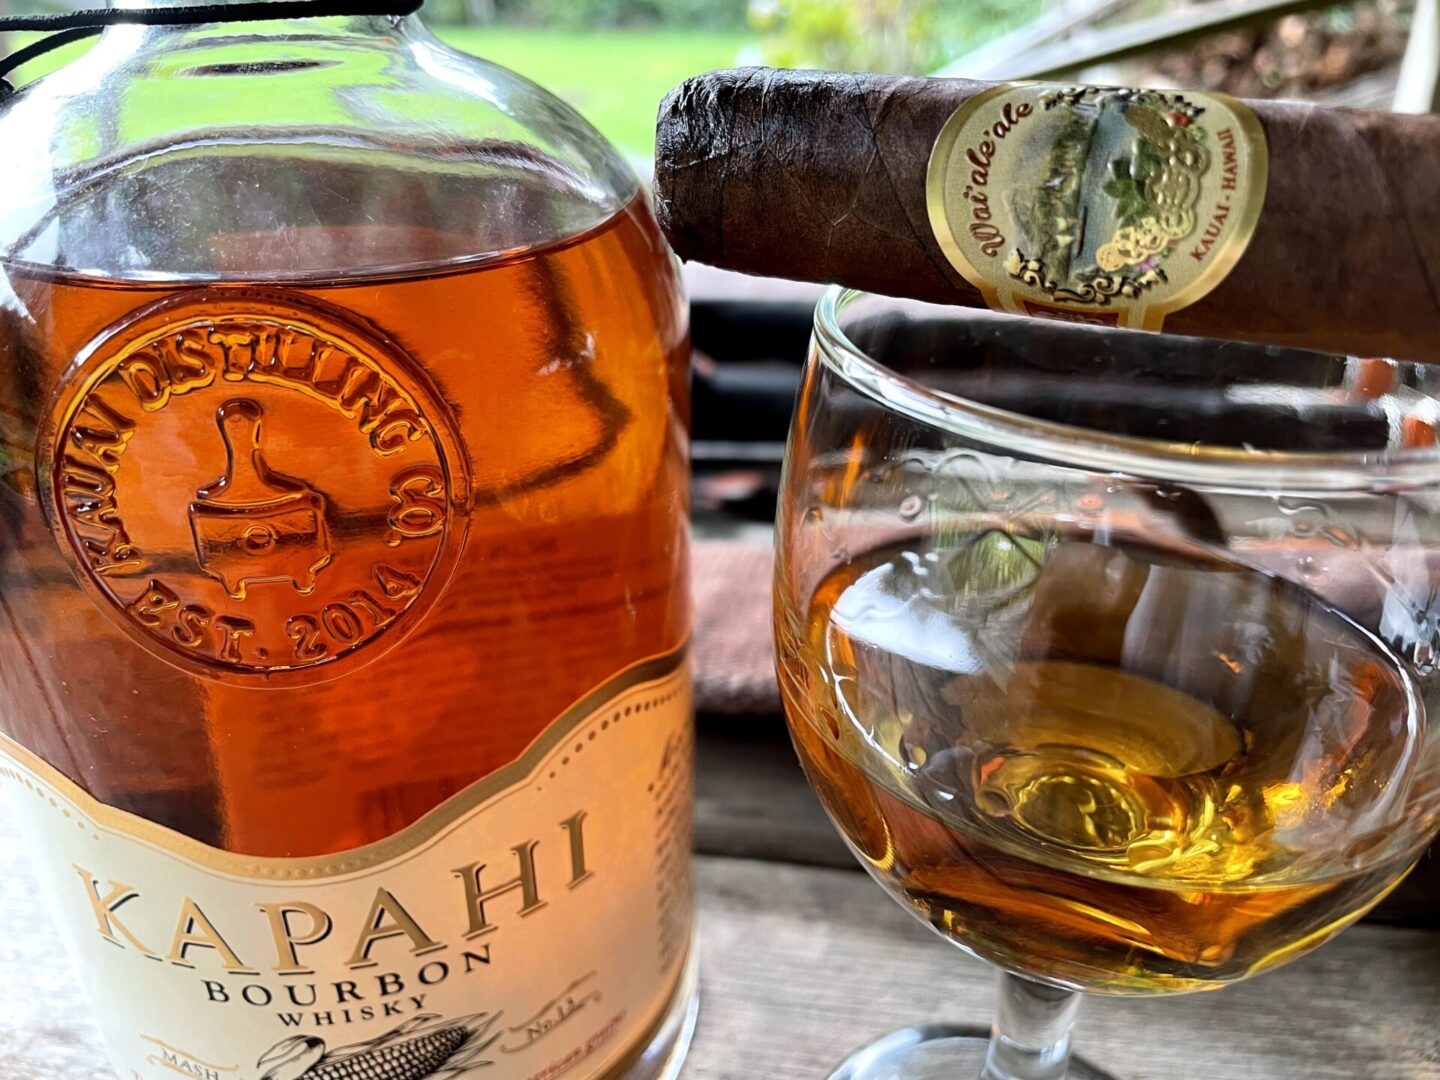 Les Drent's Kauai Bourbon and Cigar